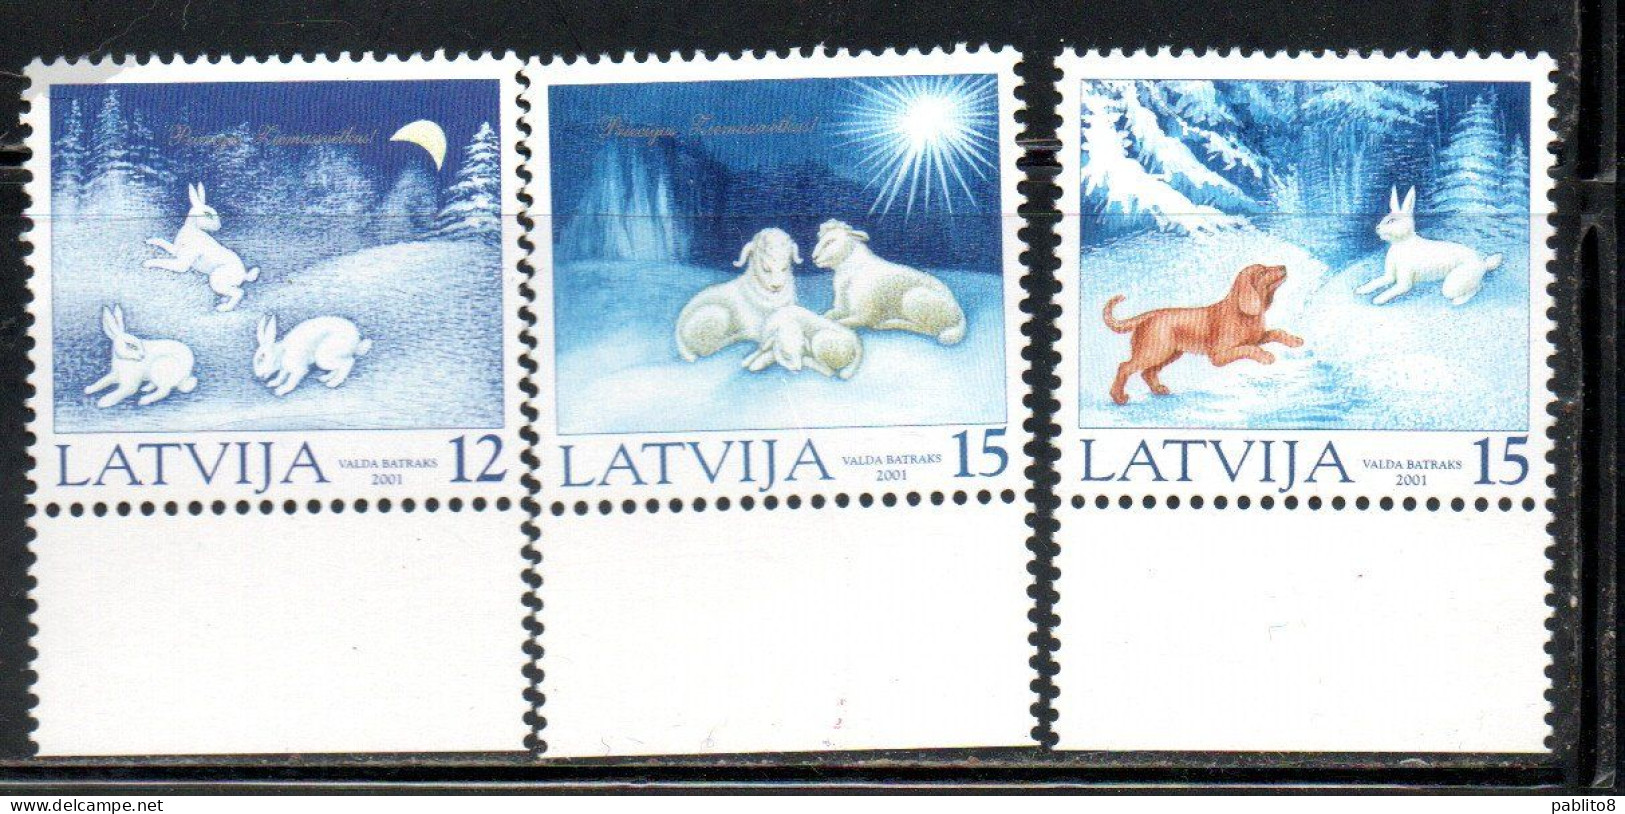 LATVIA LETTLAND LETTONIA LATVIJA 2001 CHRISTMAS NATALE NOEL WEIHNACHTEN NAVIDAD COMPLETE SET SERIE COMPLETA MNH - Letonia